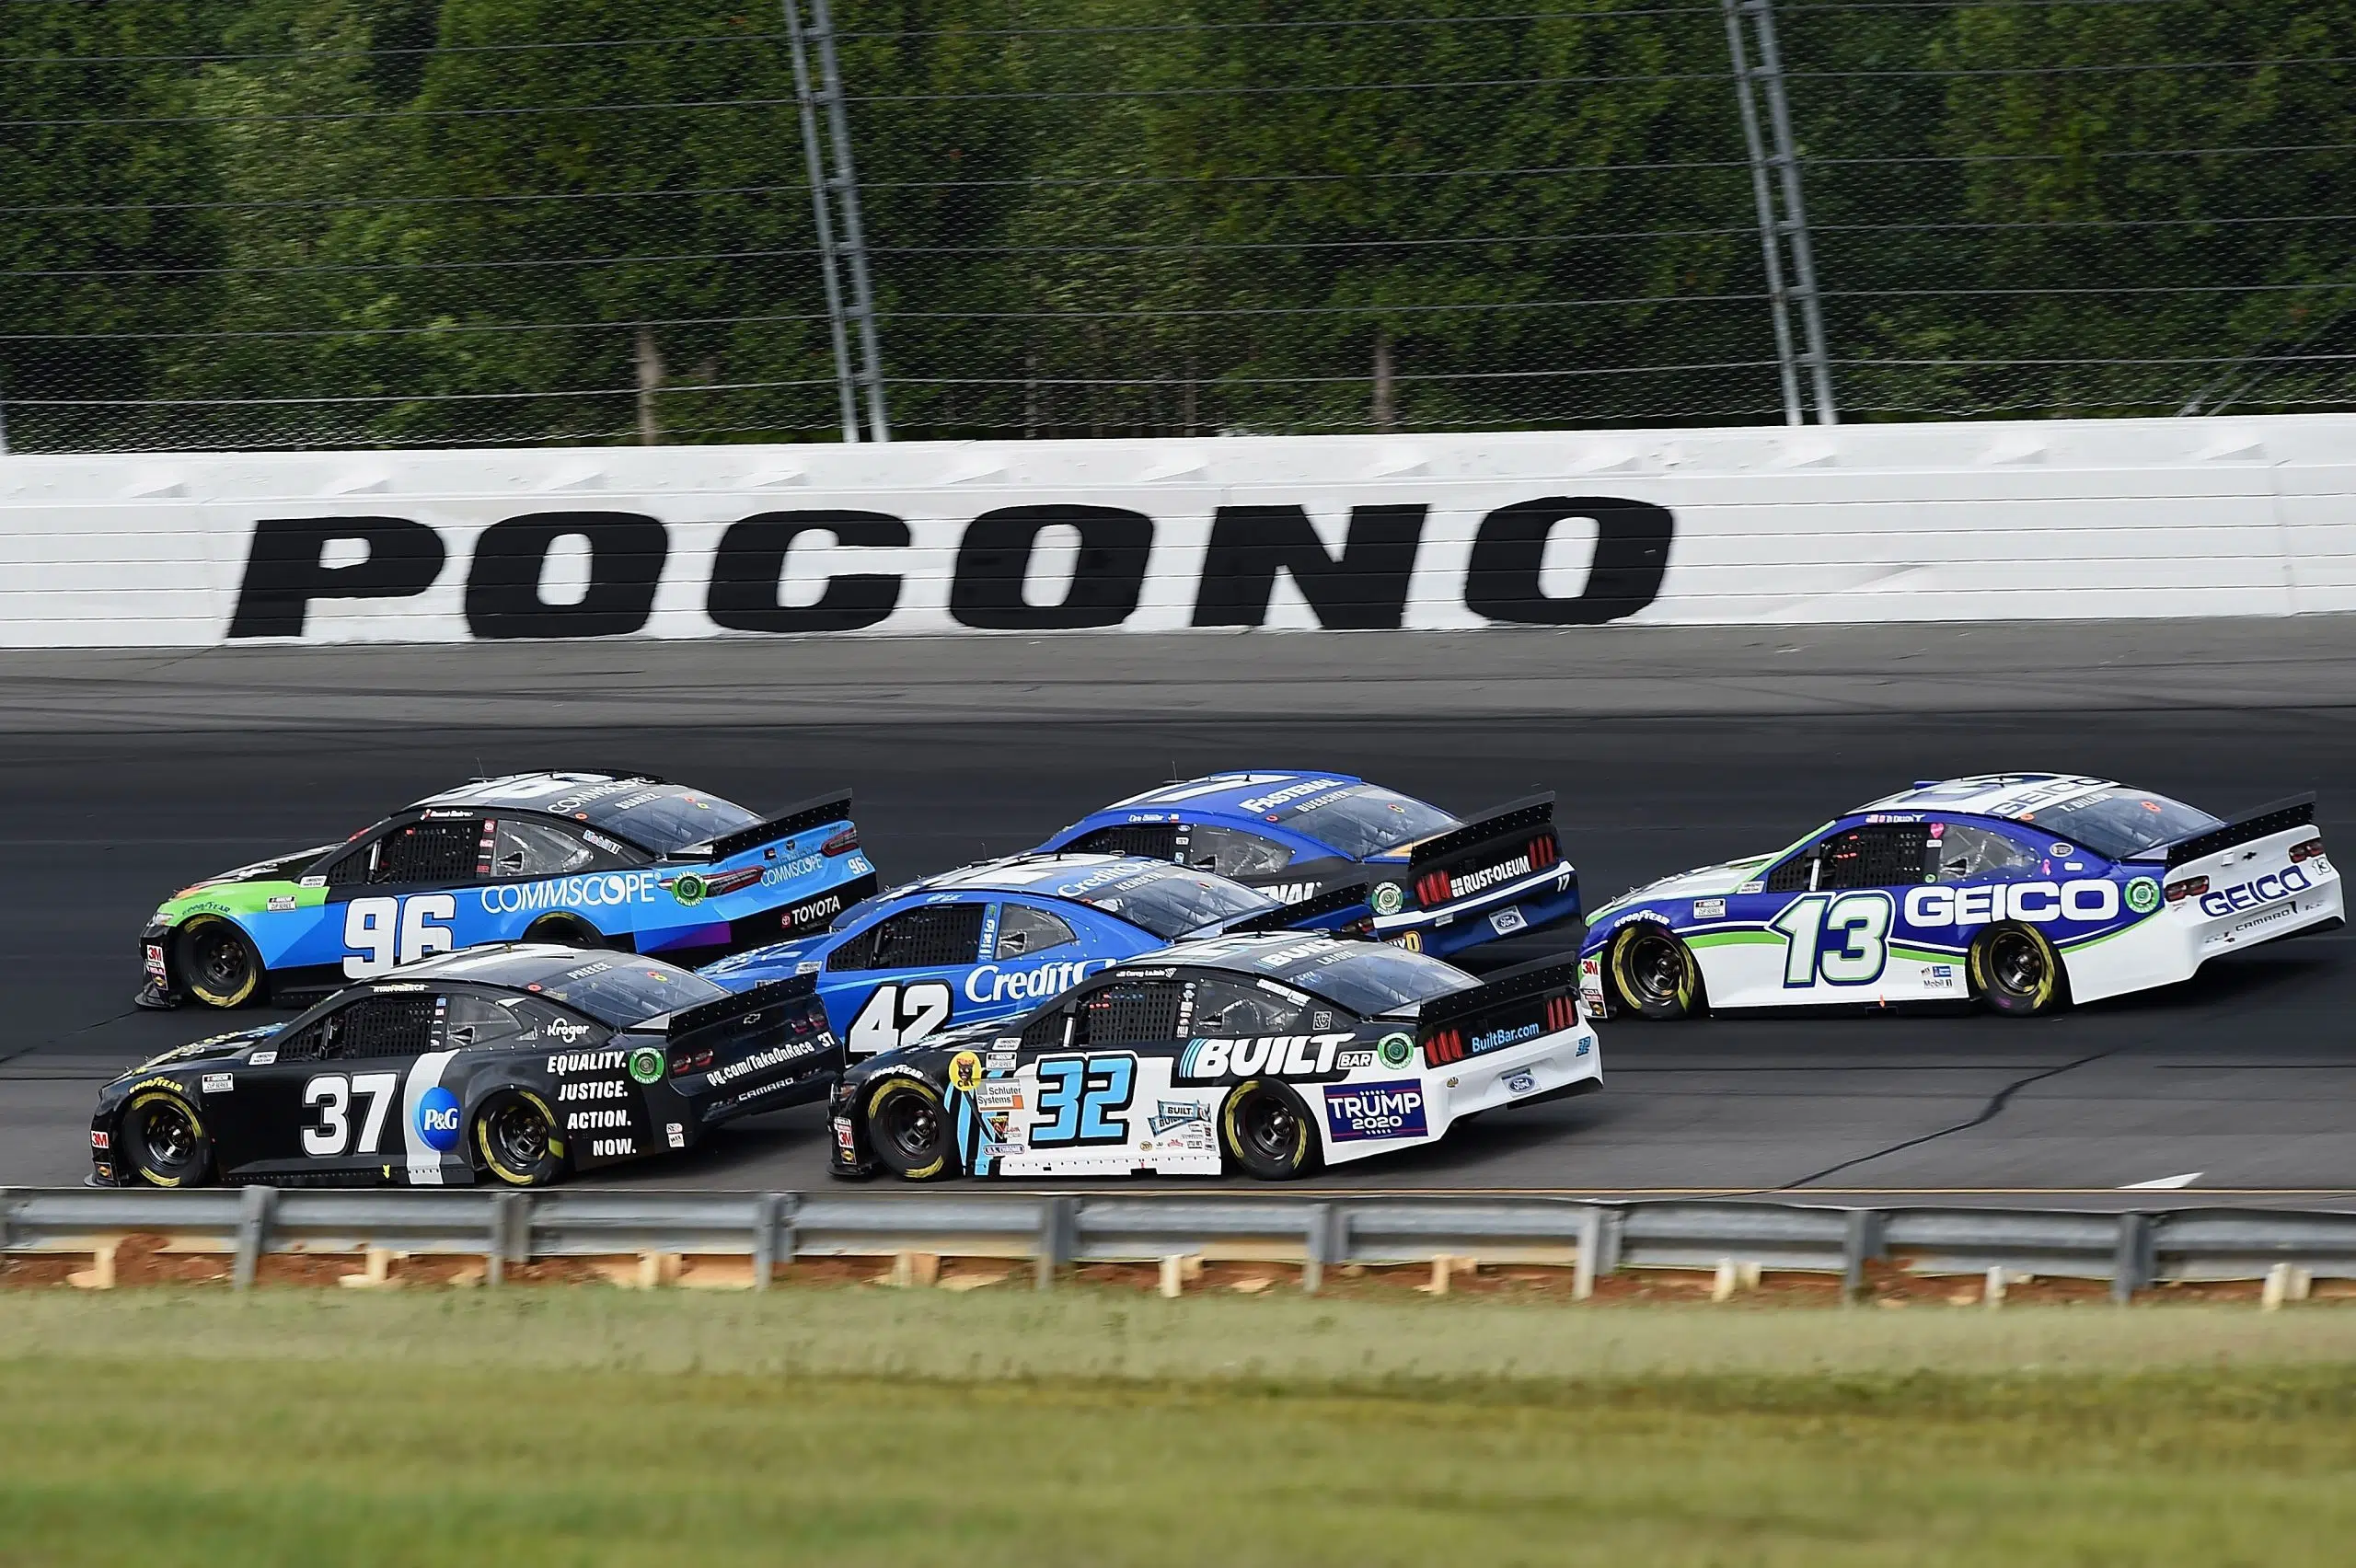 NASCAR prepares for a doubleheader weekend at Pocono Raceway 1440 AM